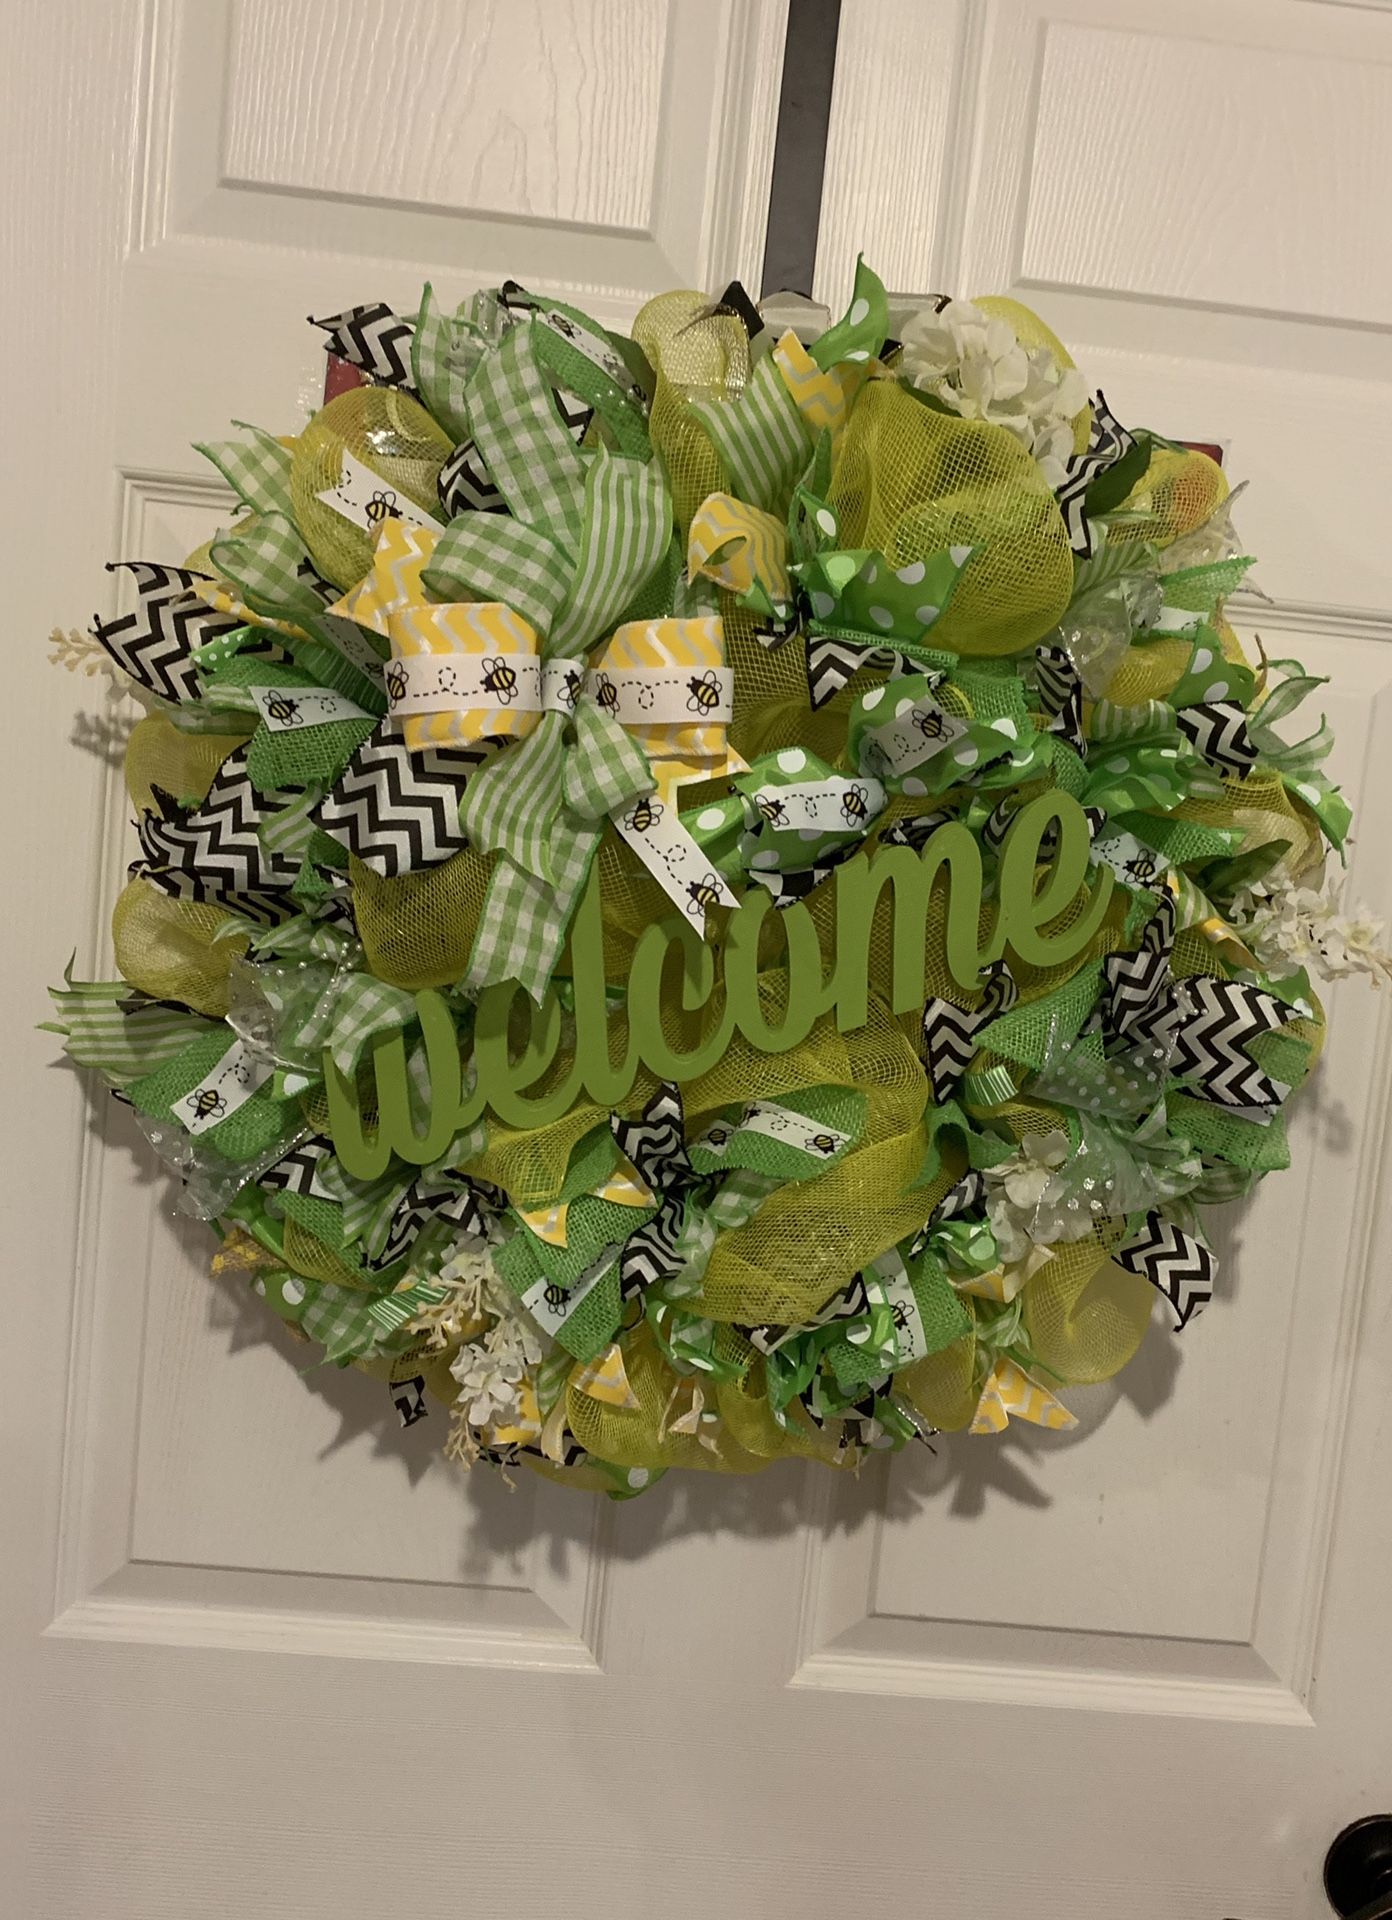 Custom made to order wreaths